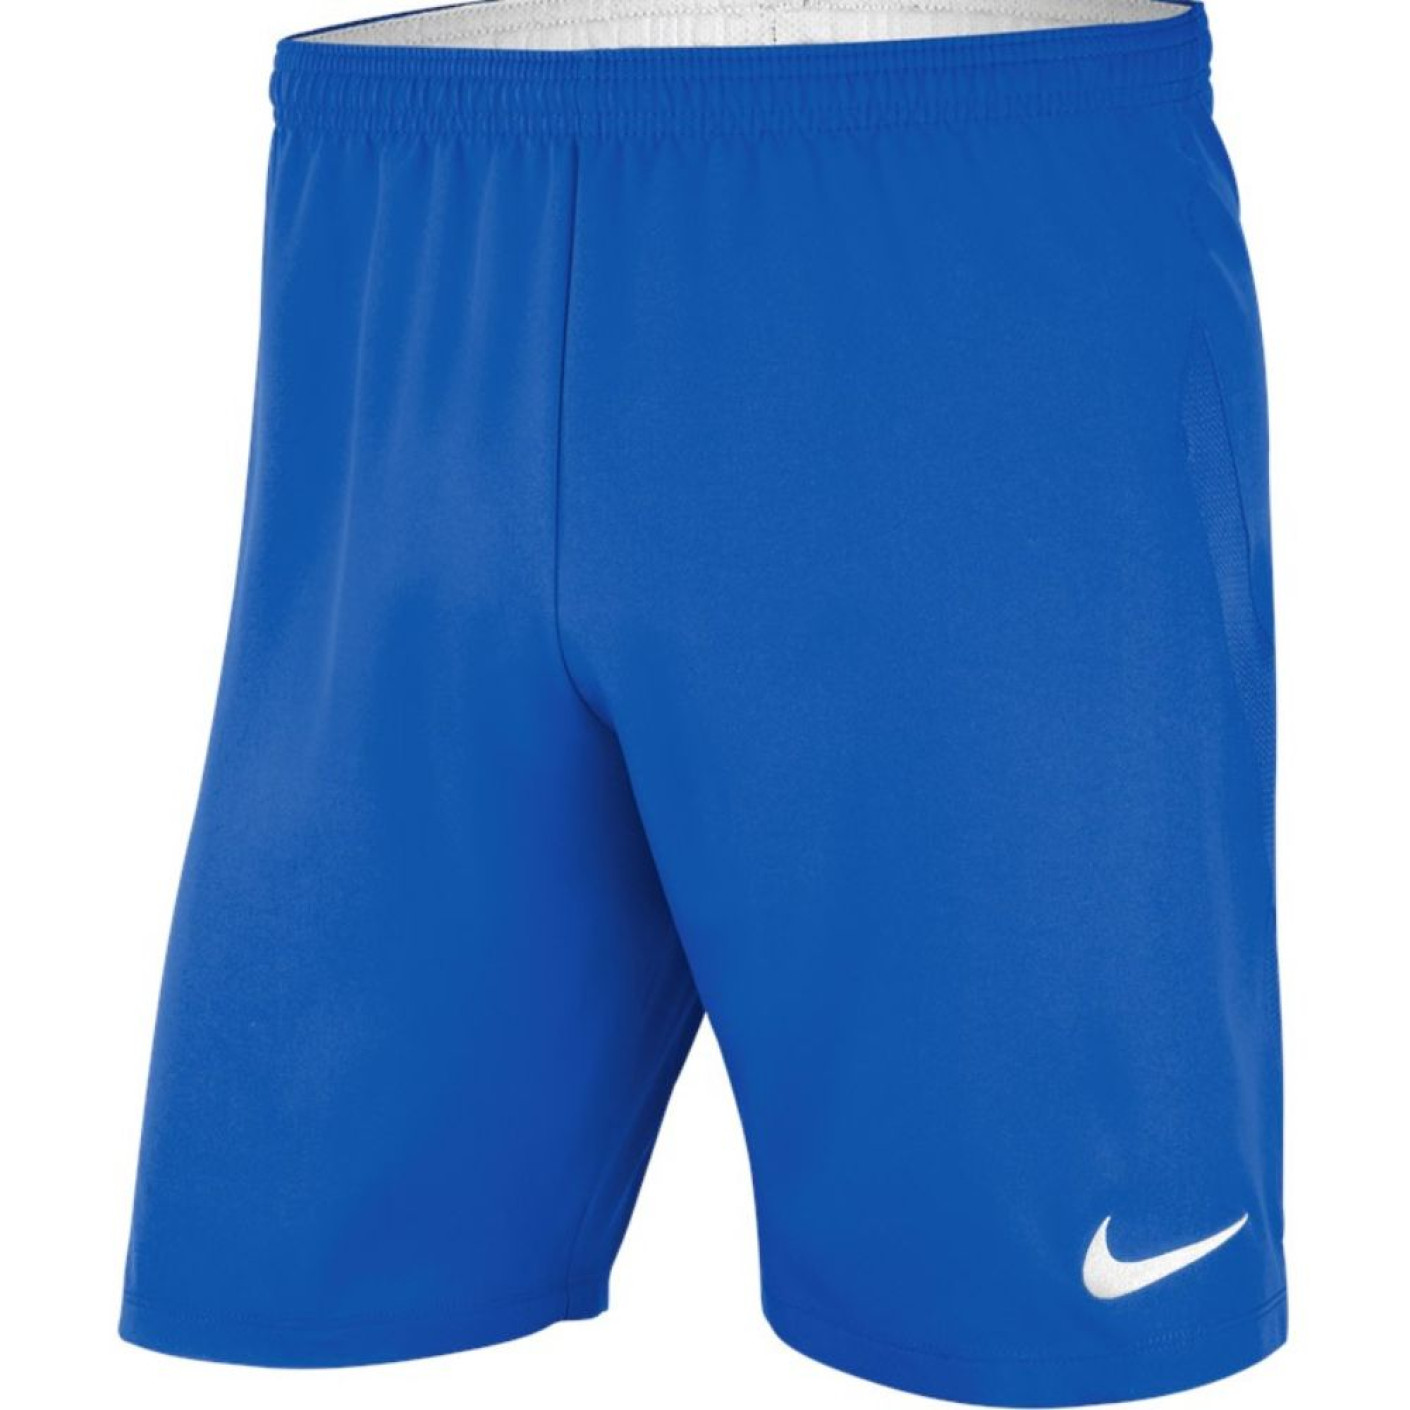 Nike Dri-FIT Laser IV Voetbalbroekje Kids Royal Blauw